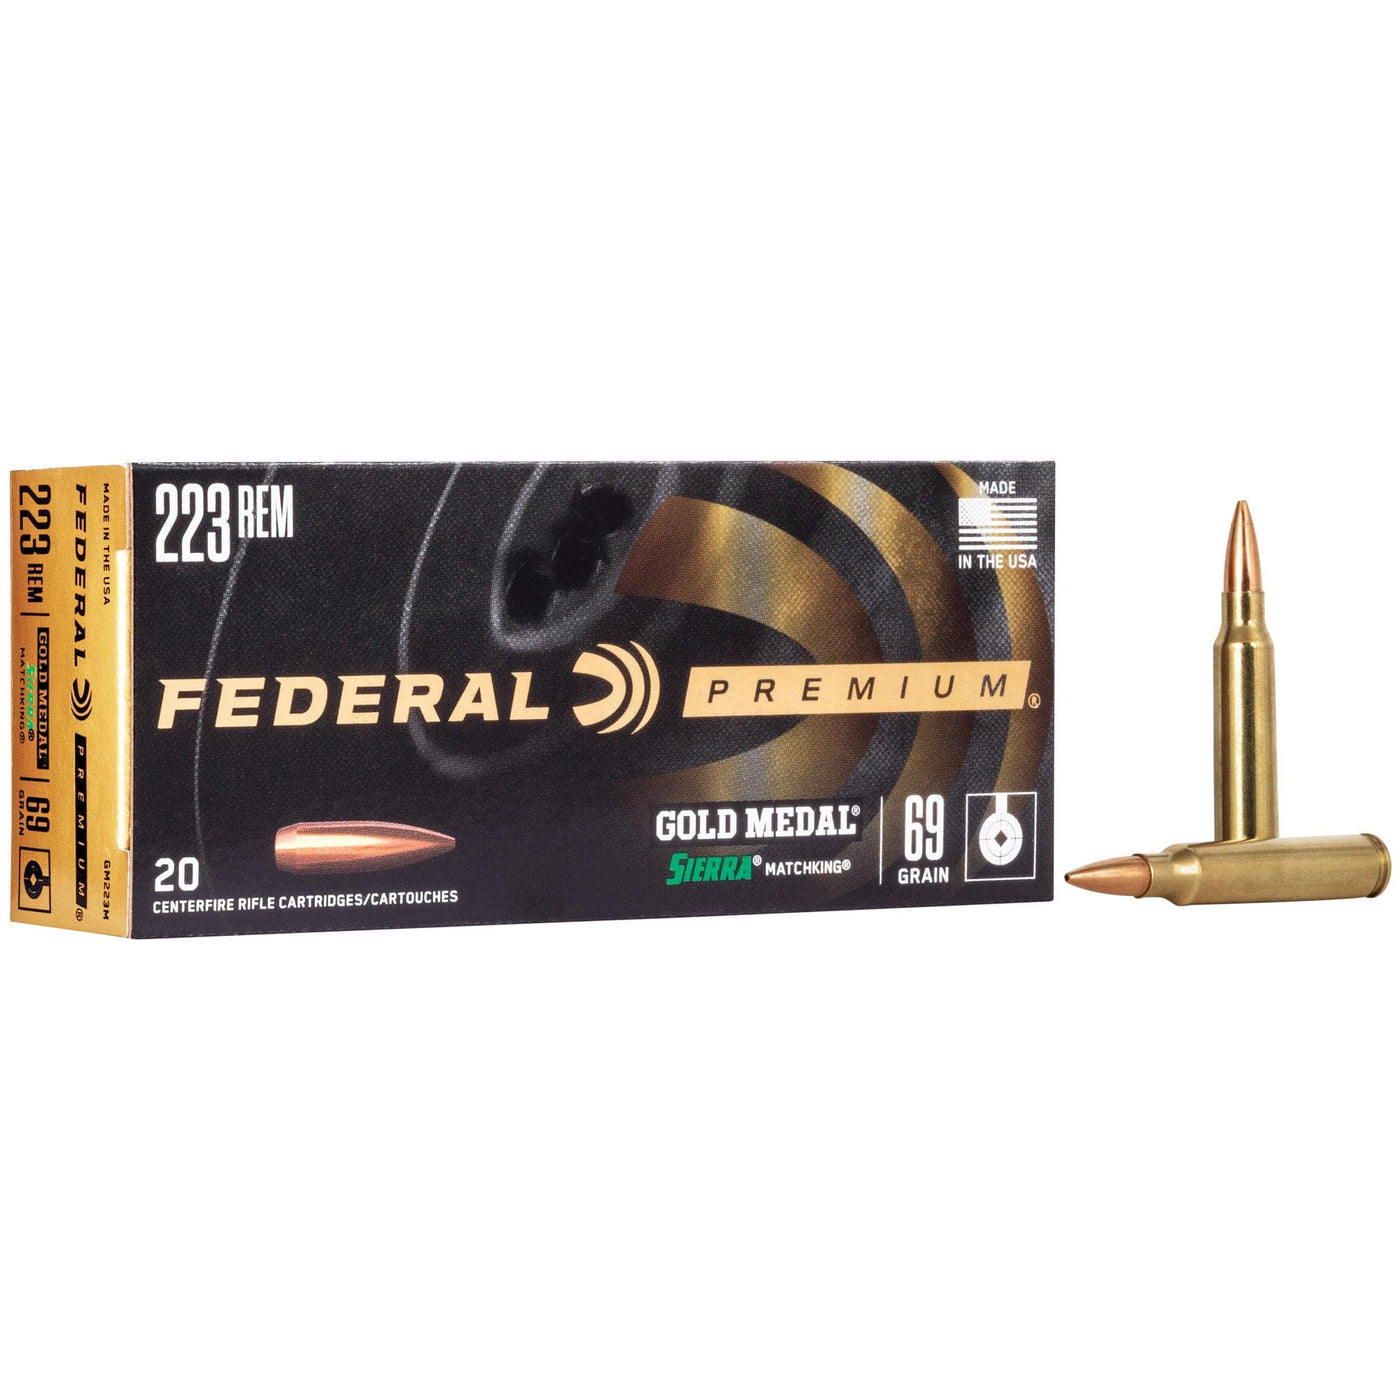 Federal Fed Gold Mdl 223rem 69gr Bthp 20/200 Ammunition